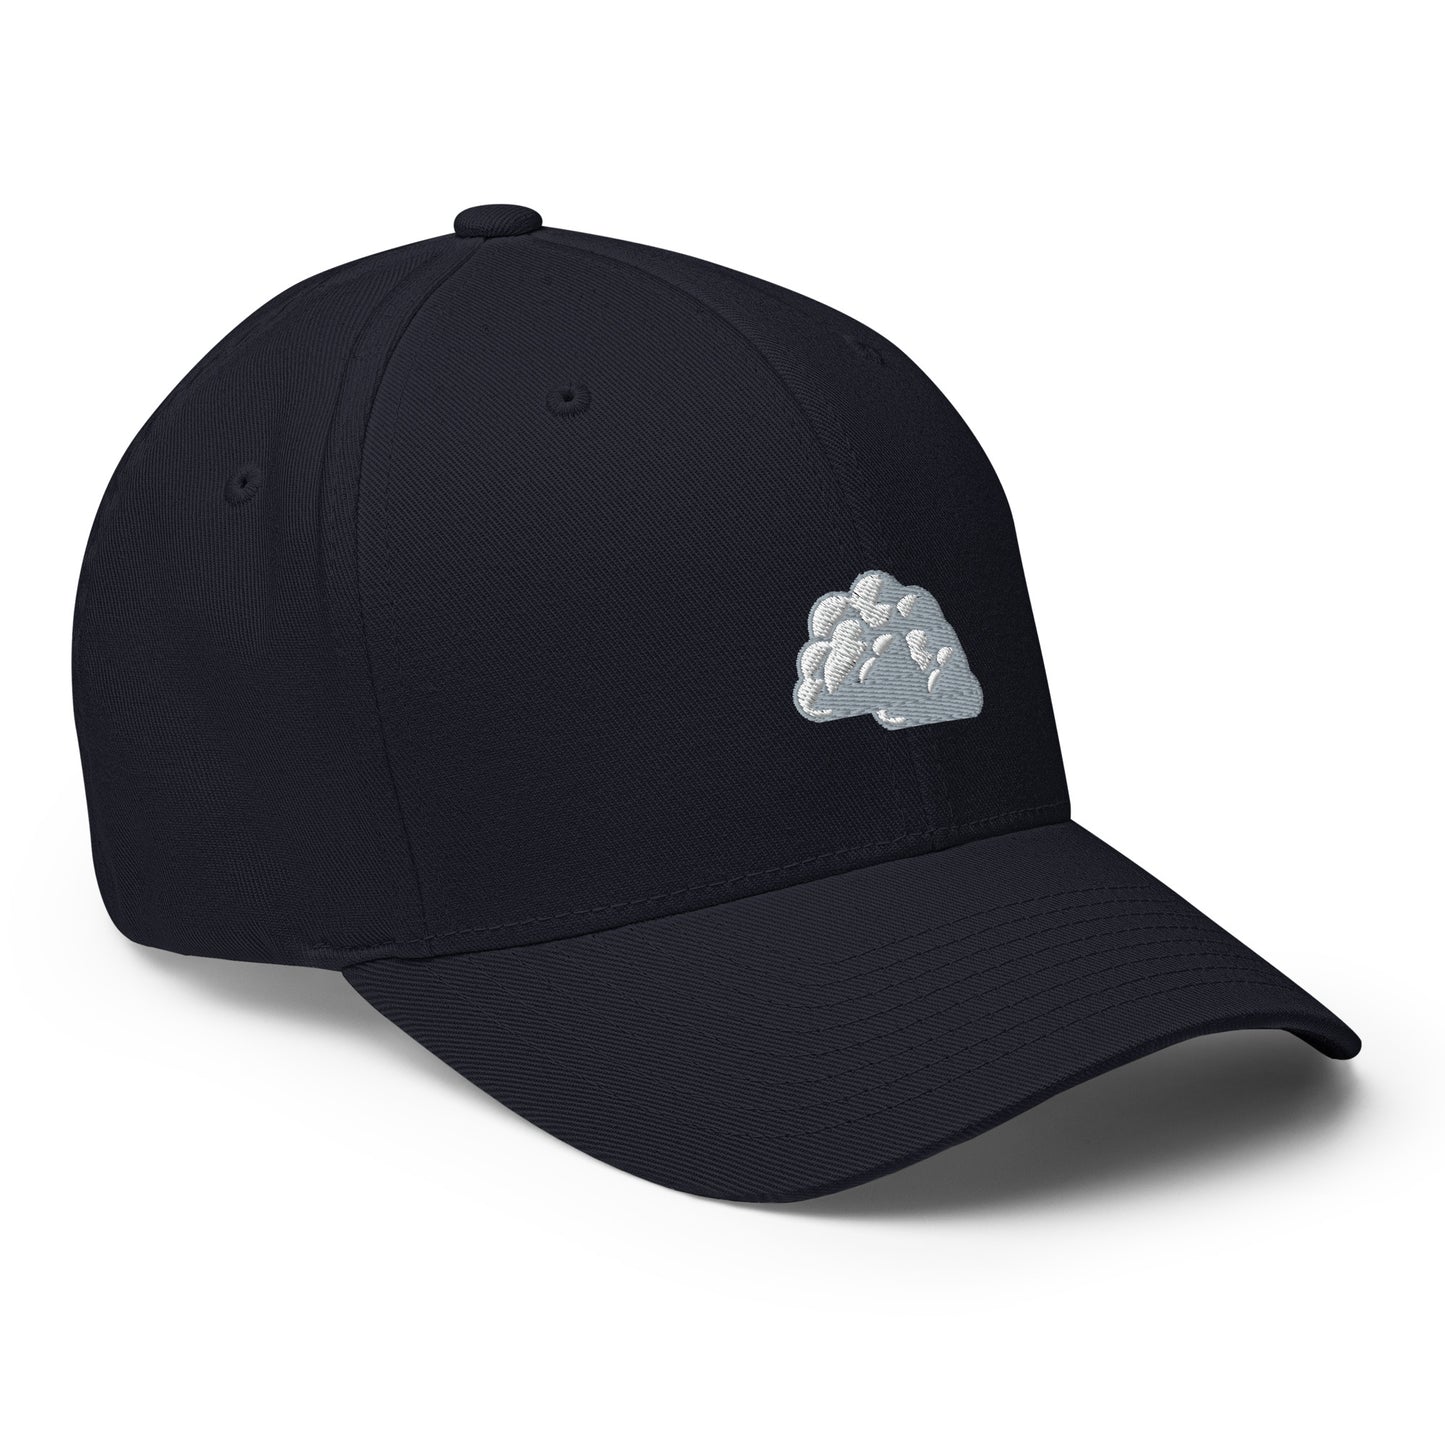 Baseball Cap with Dark Cloud Symbol